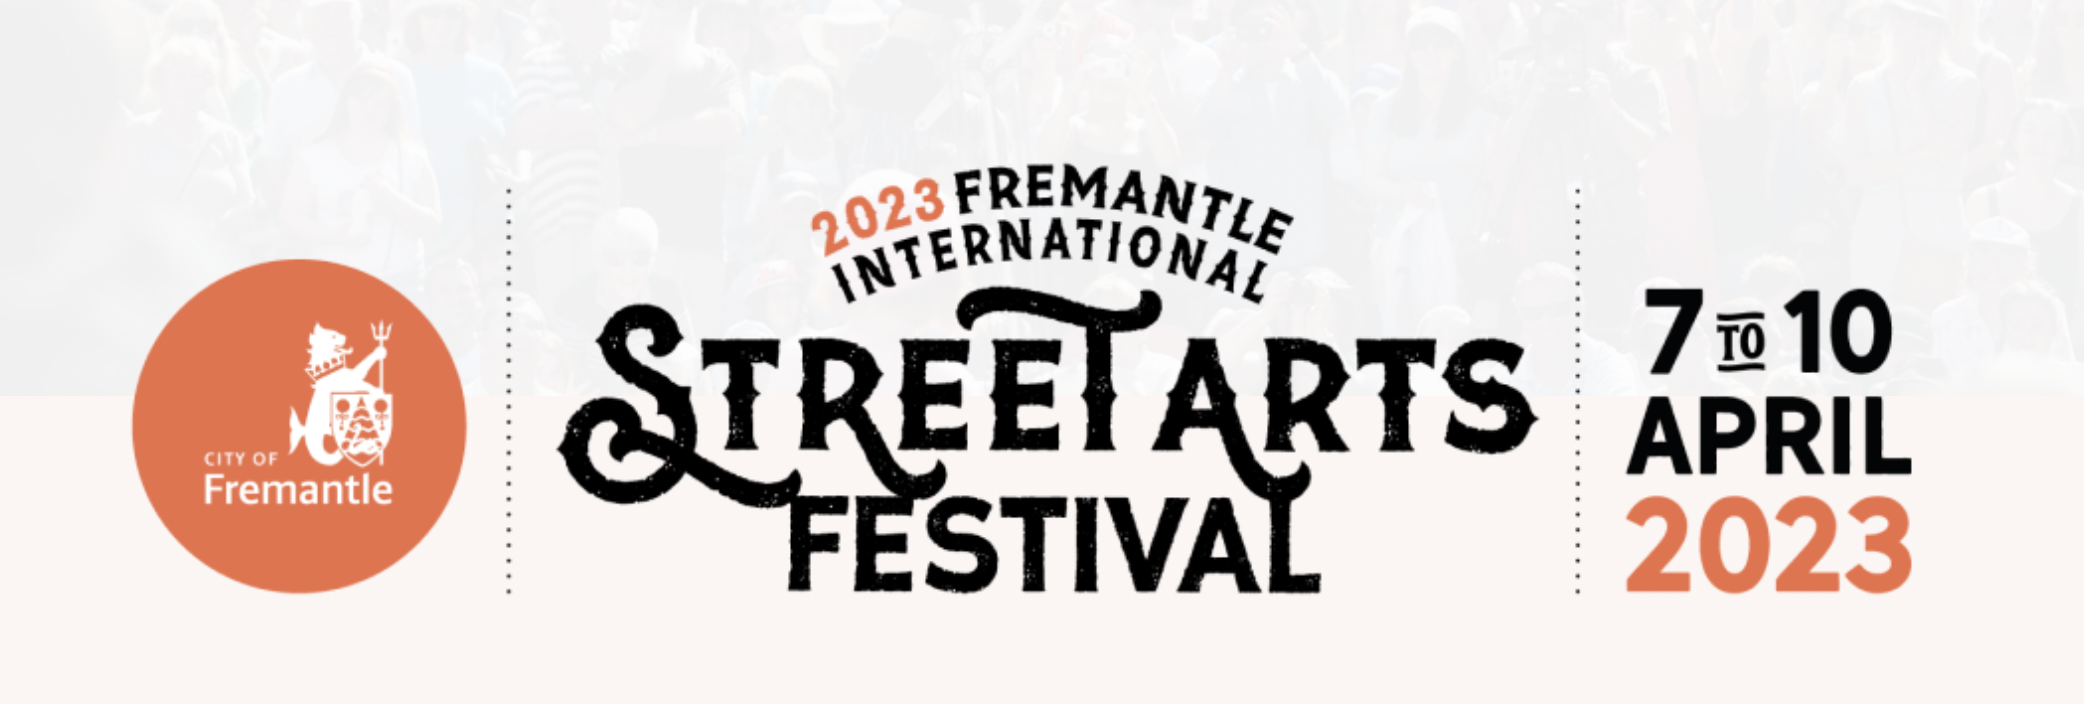 2023 Fremantle International Street Arts Festival - Perth Festivals 2023